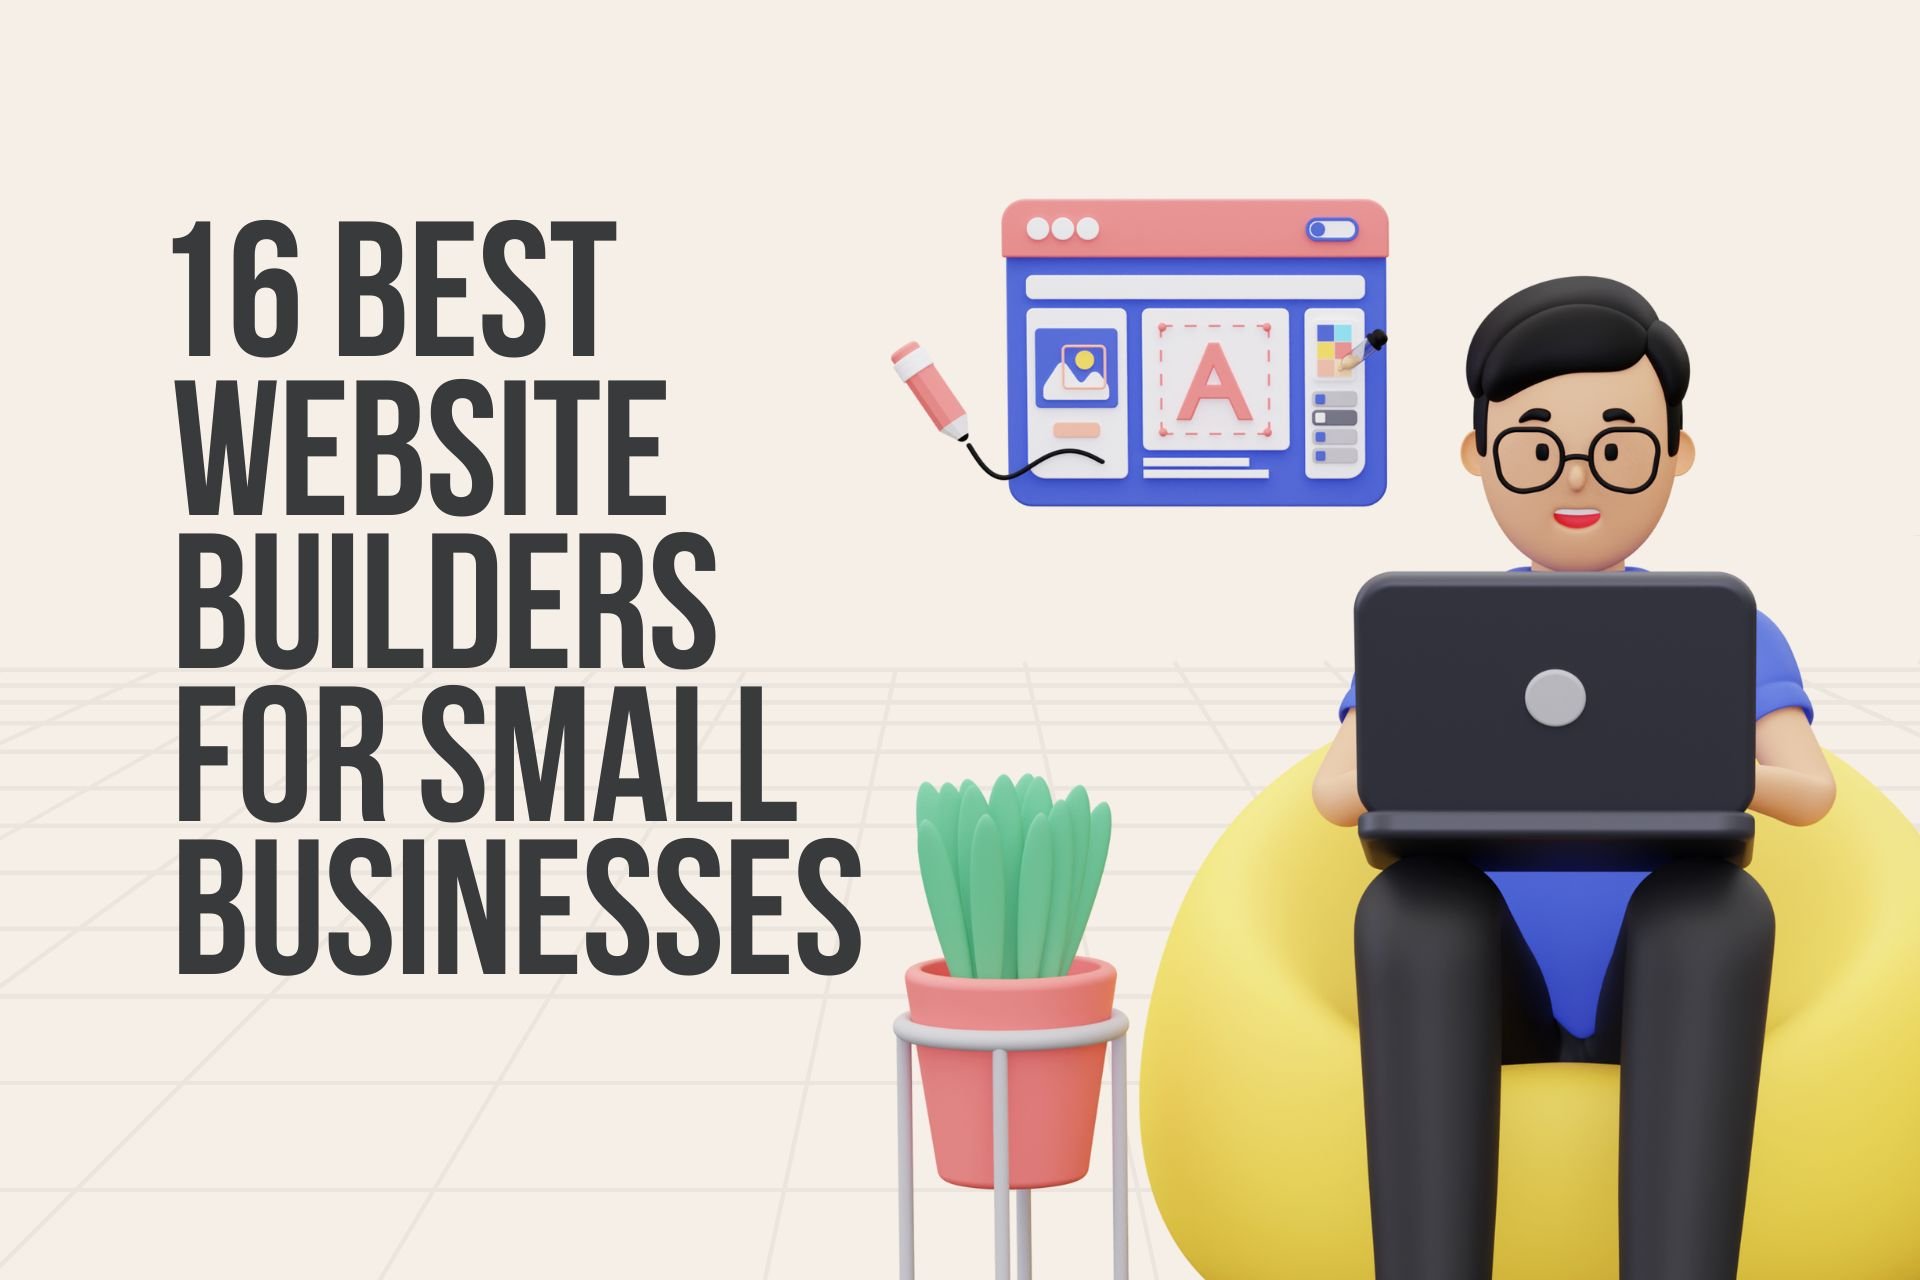 best website builder for small business